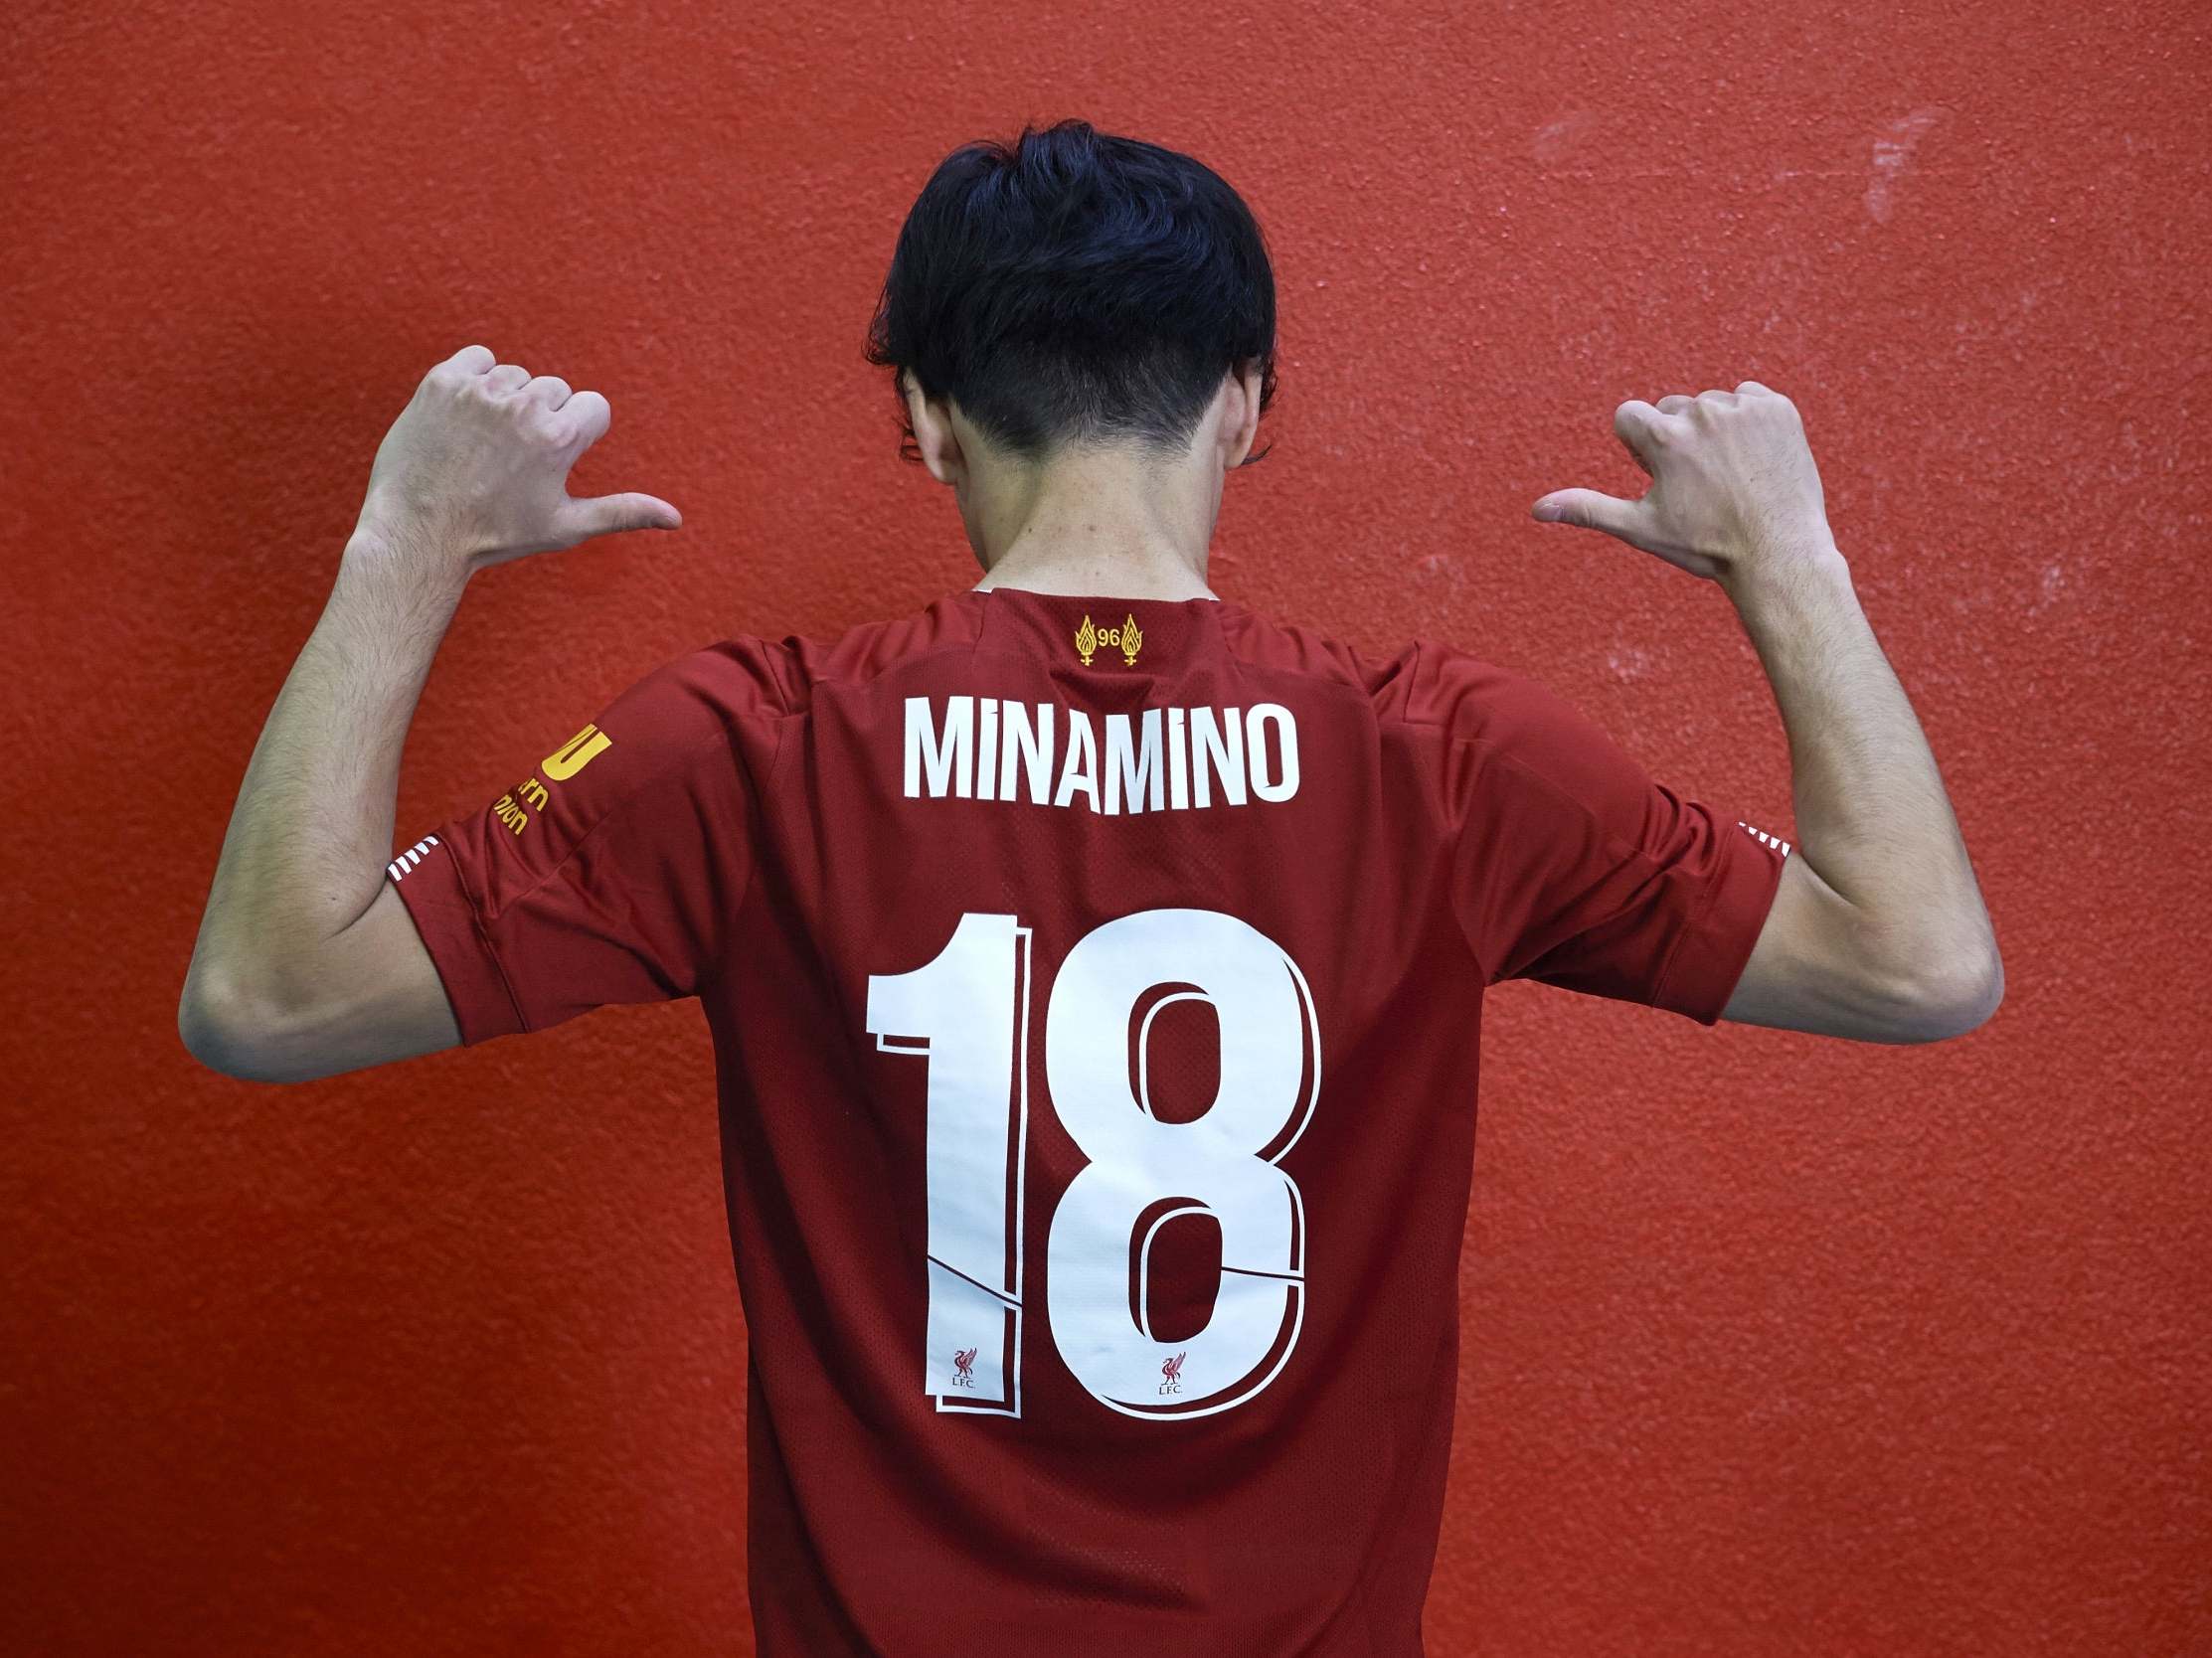 Takumi Minamino signs for Liverpool